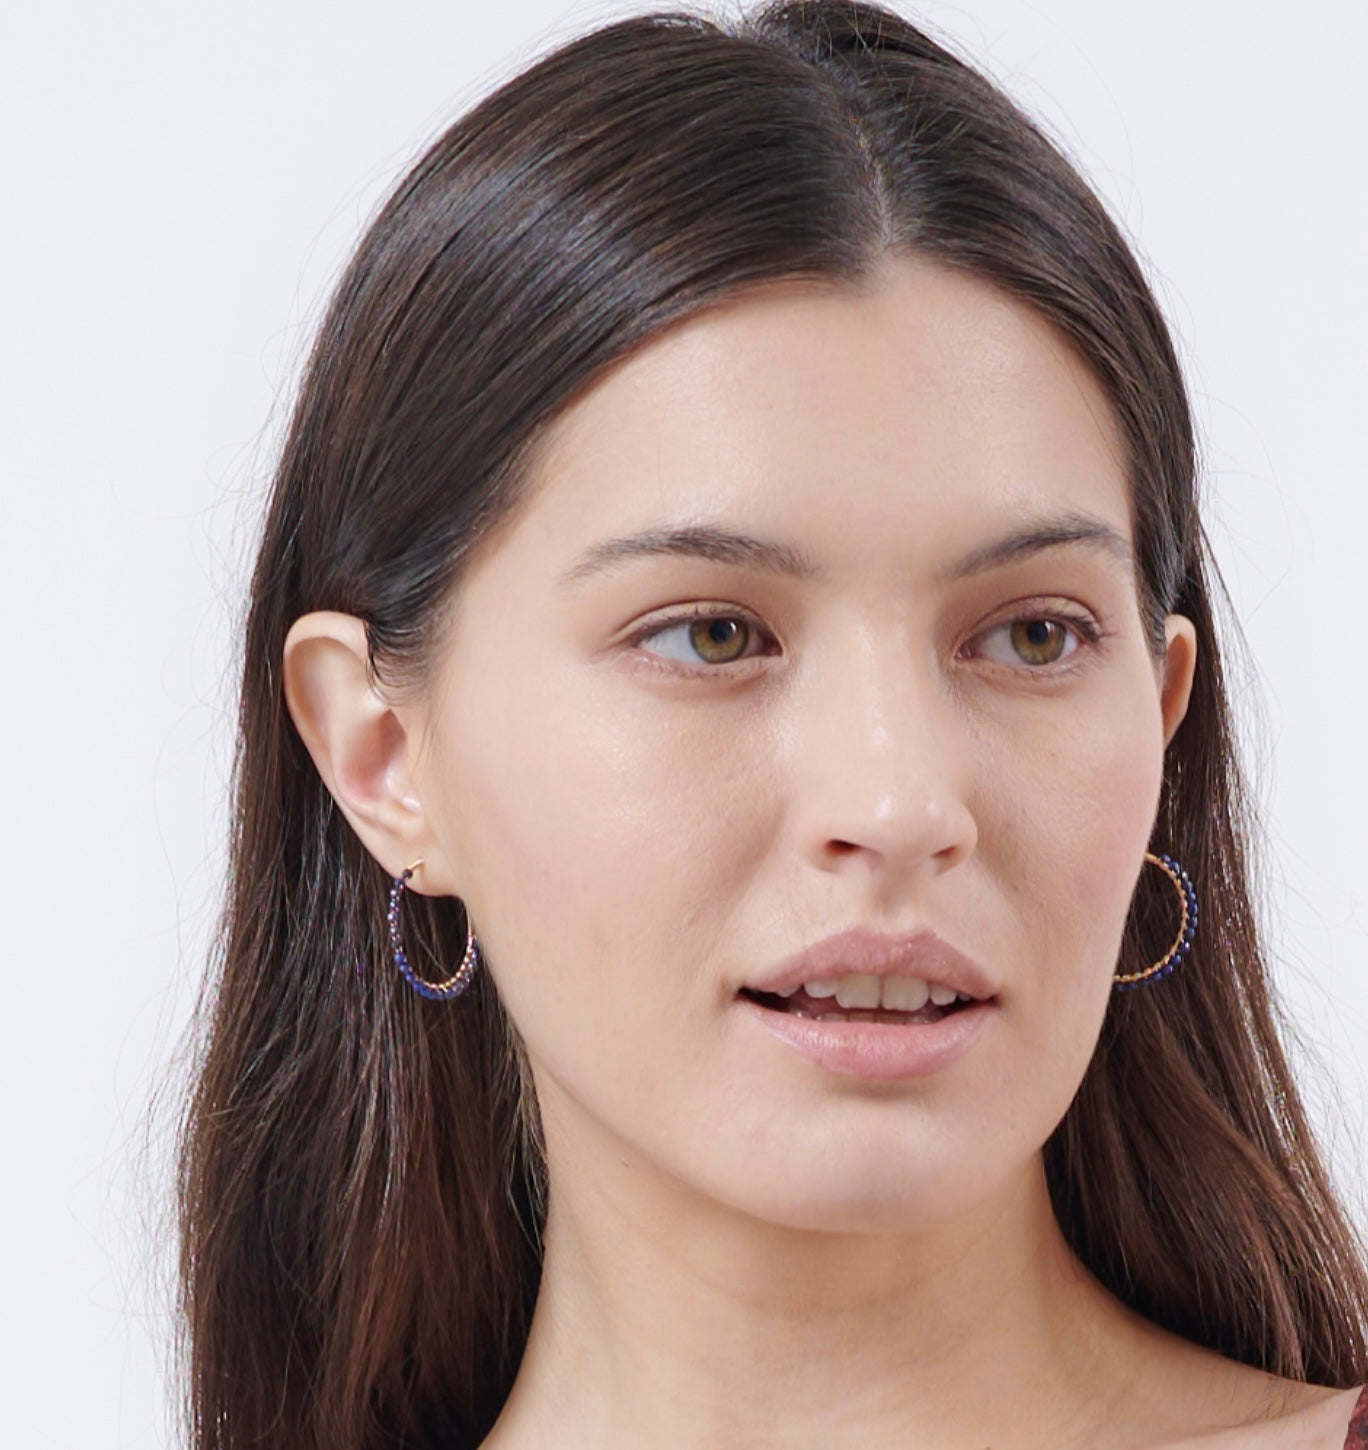 Upgrade Your Look with CHIYO Hoop Earrings